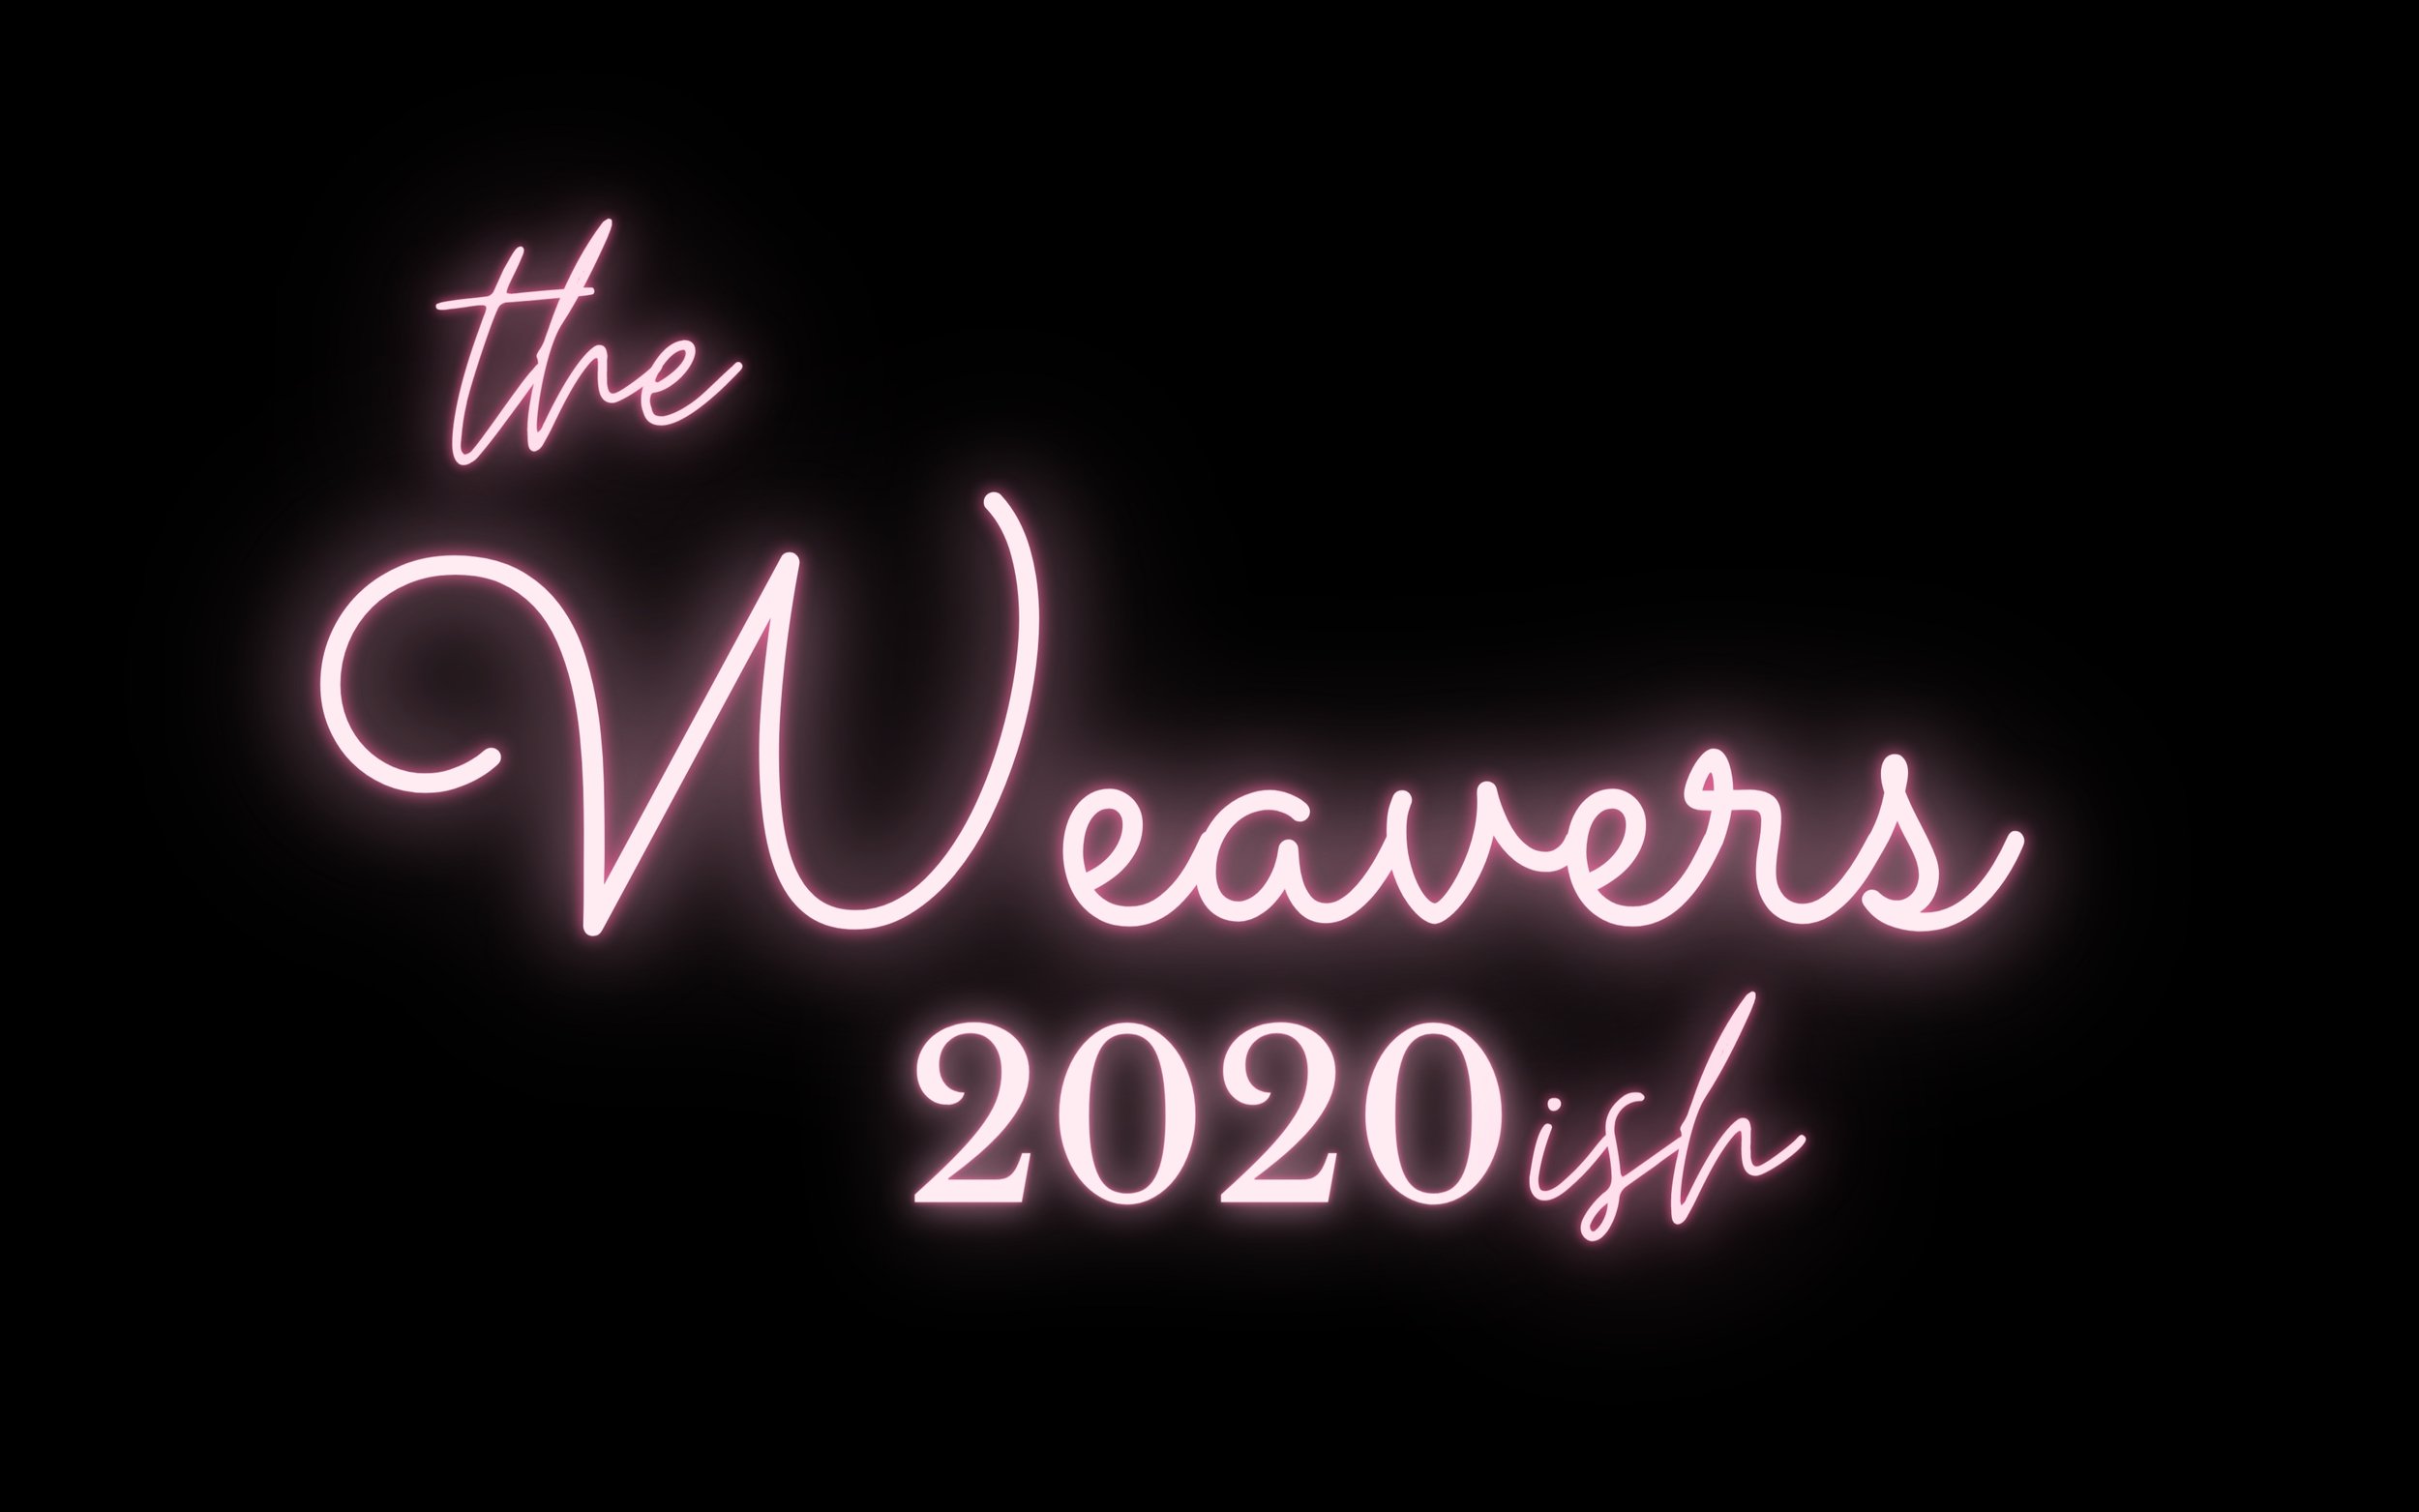 The Weavers 2020ish (1280 x 800 px).jpg